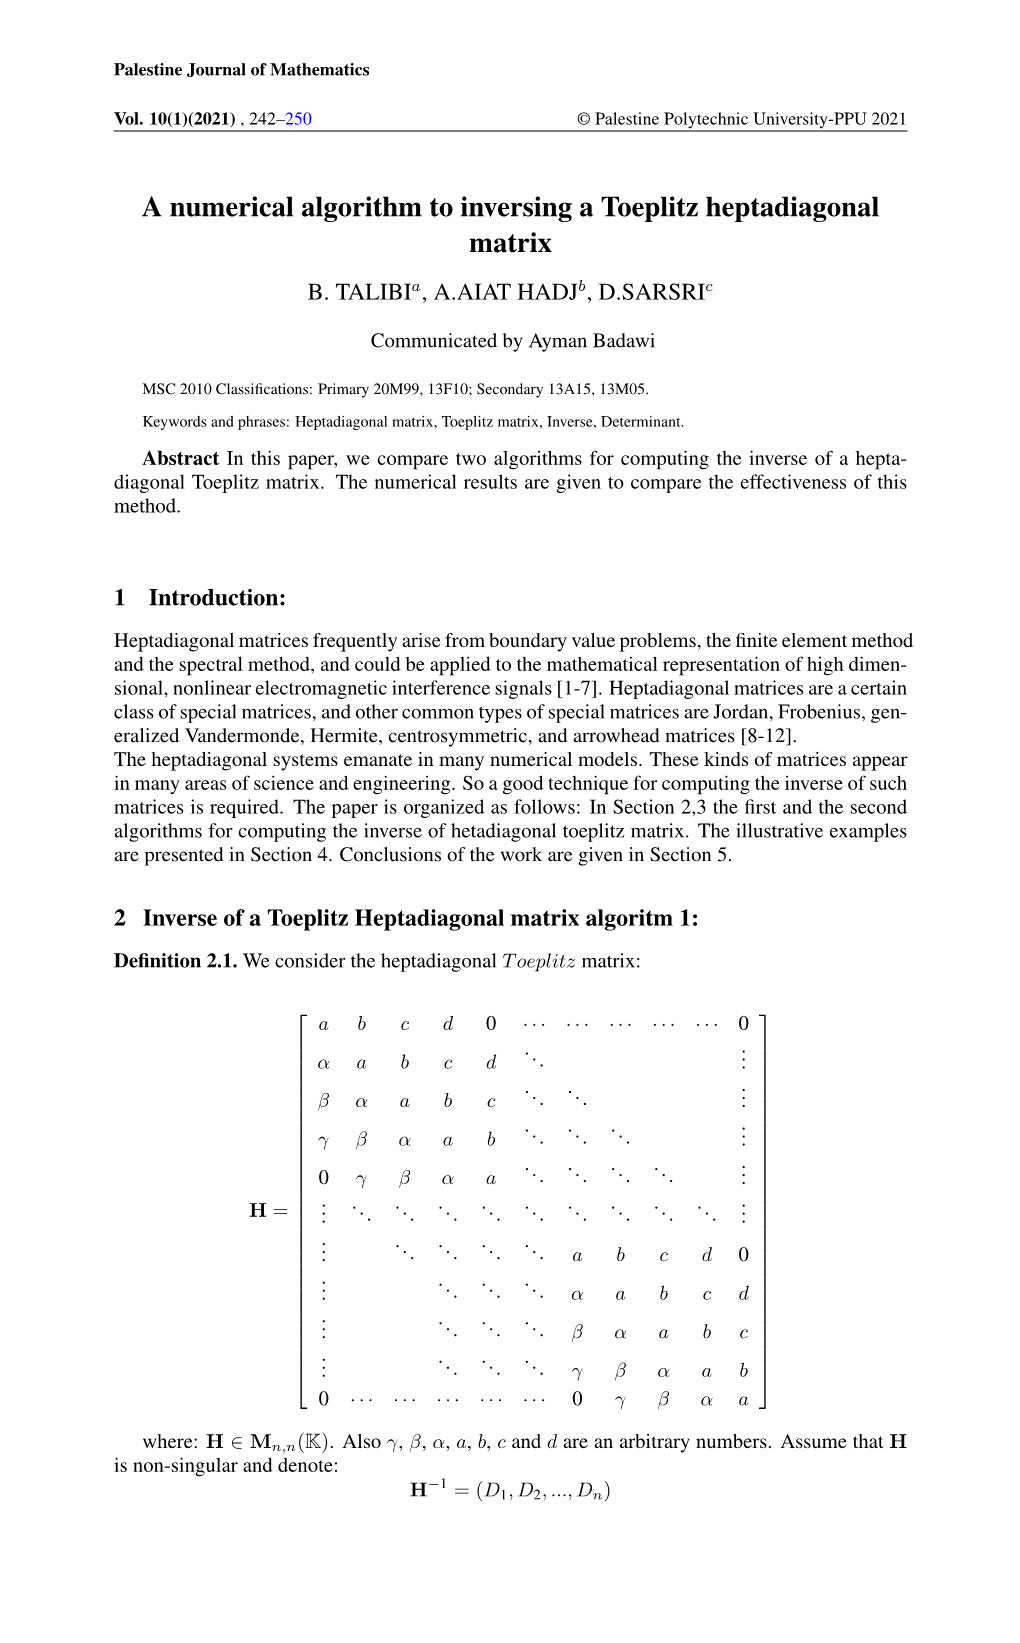 A Numerical Algorithm to Inversing a Toeplitz Heptadiagonal Matrix B